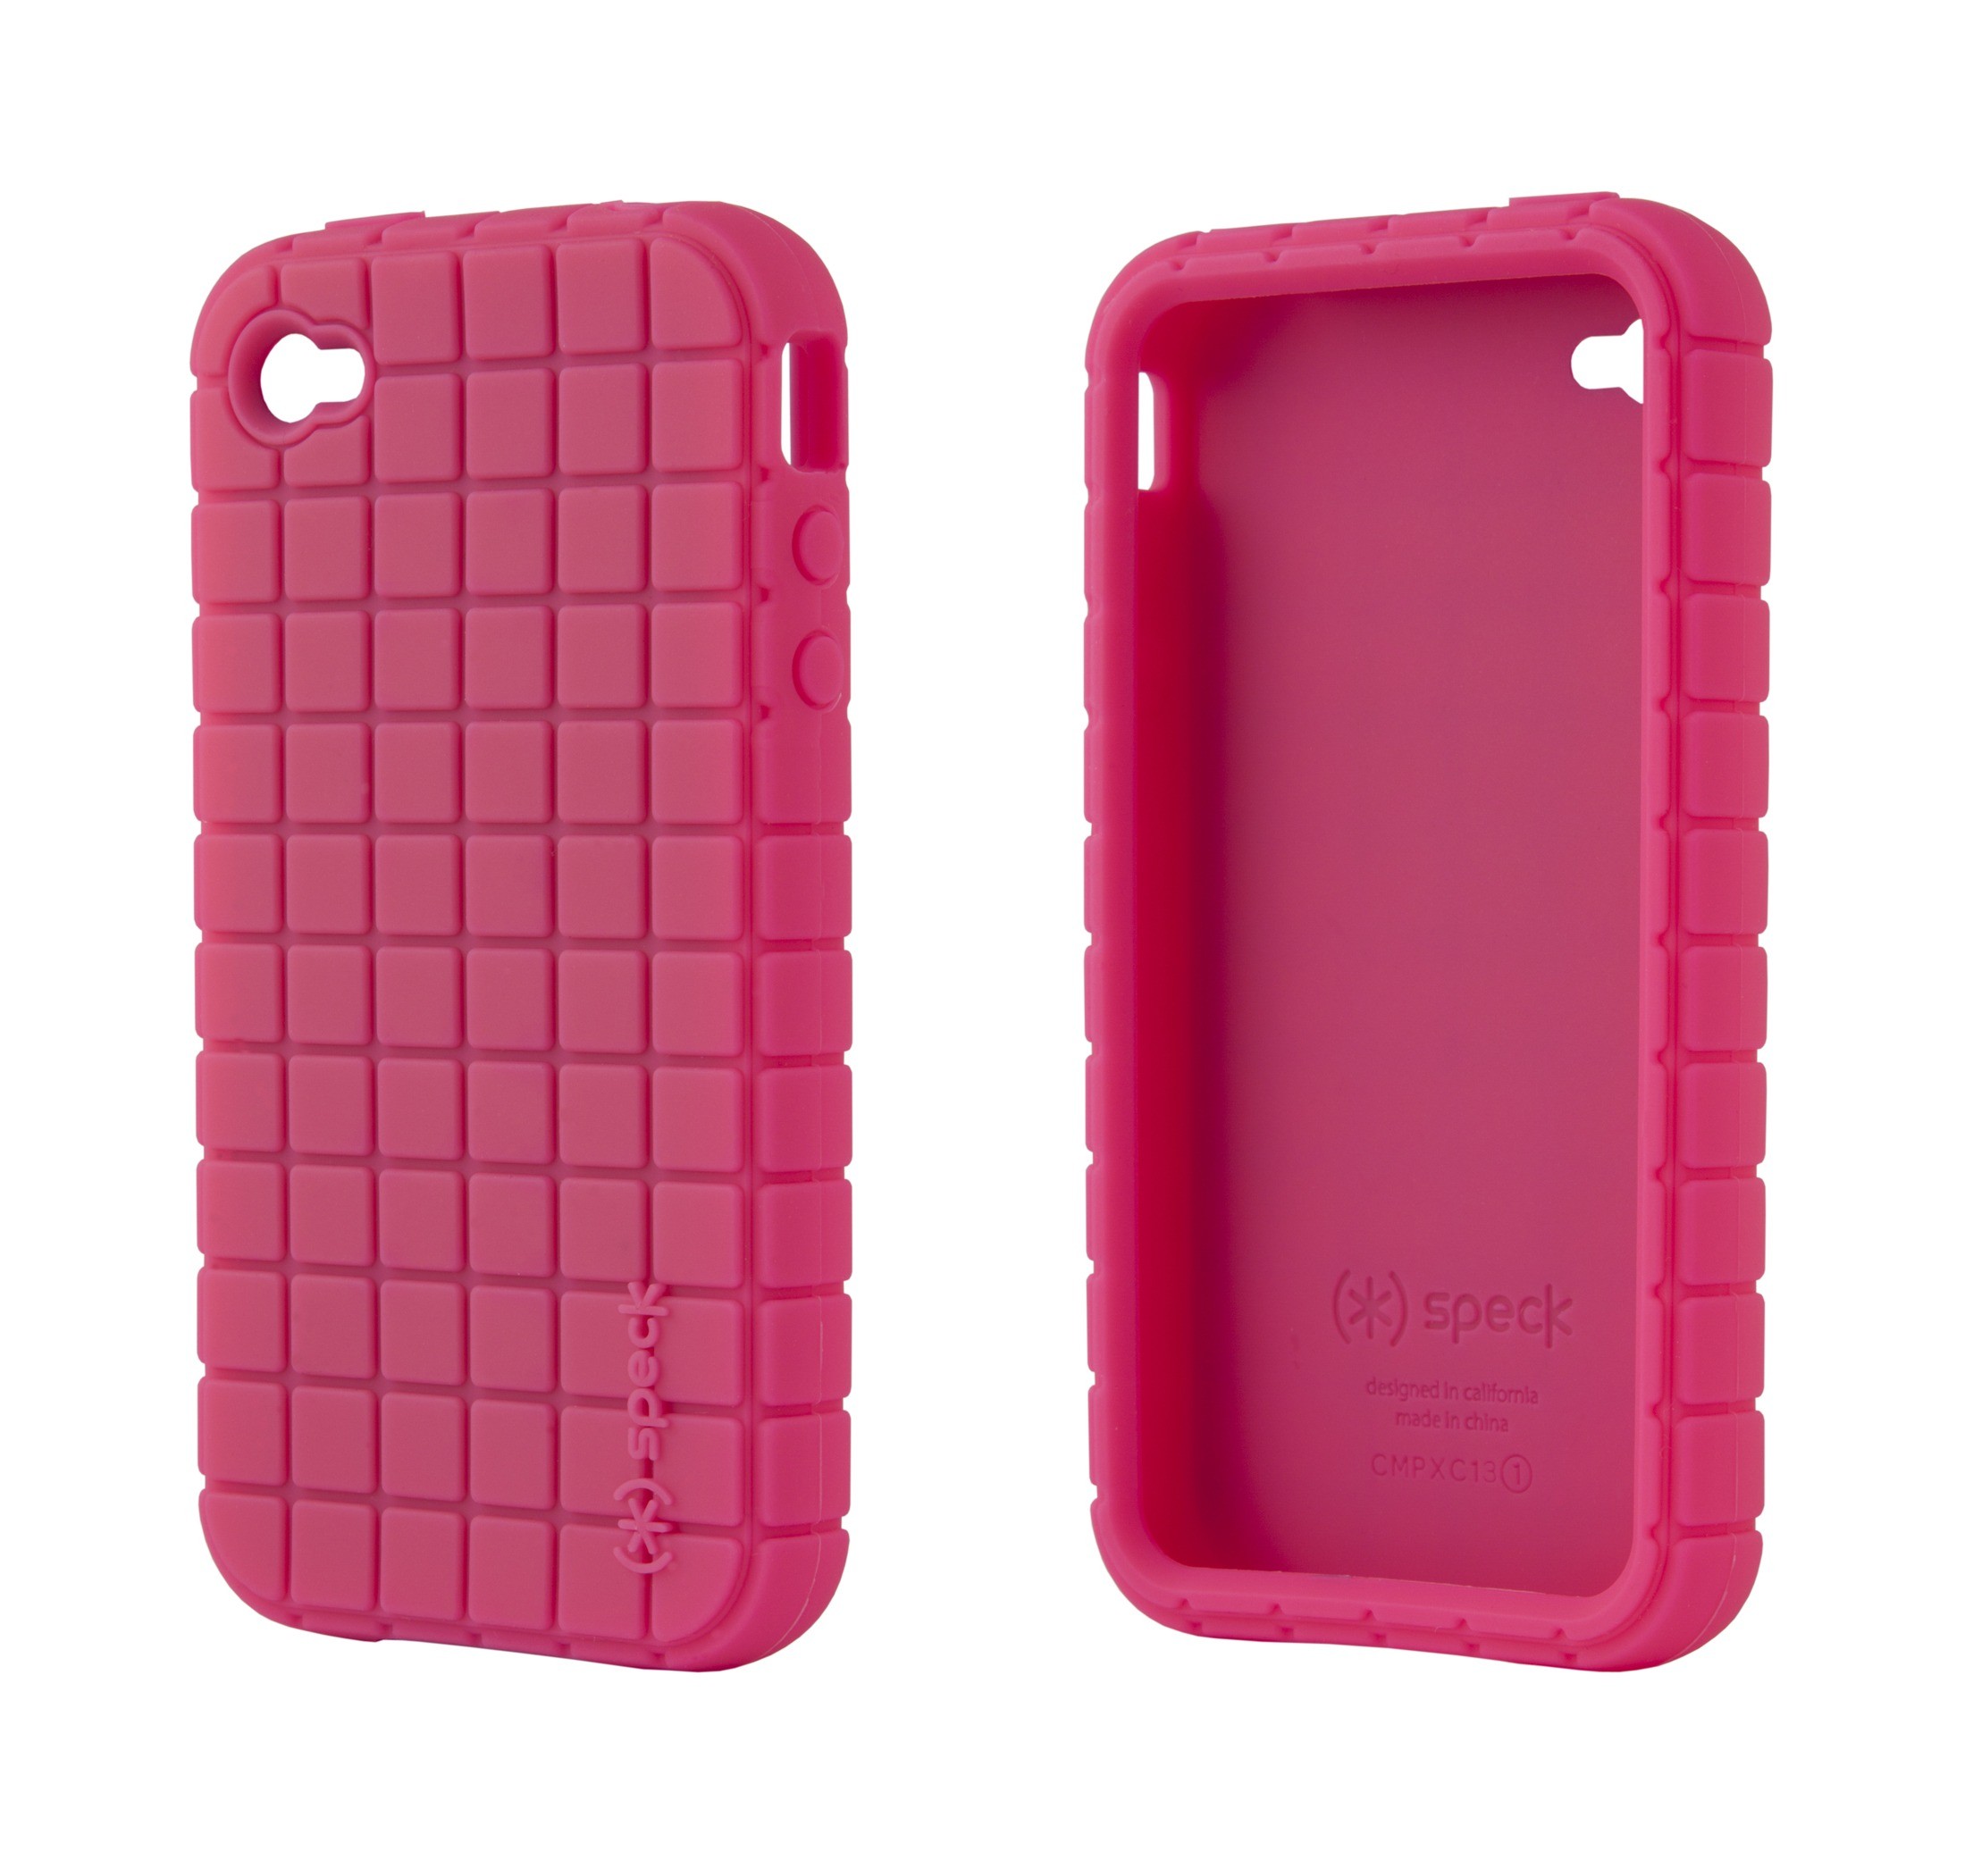 Pixel Silikone Cover til iPhone 4 - Pink